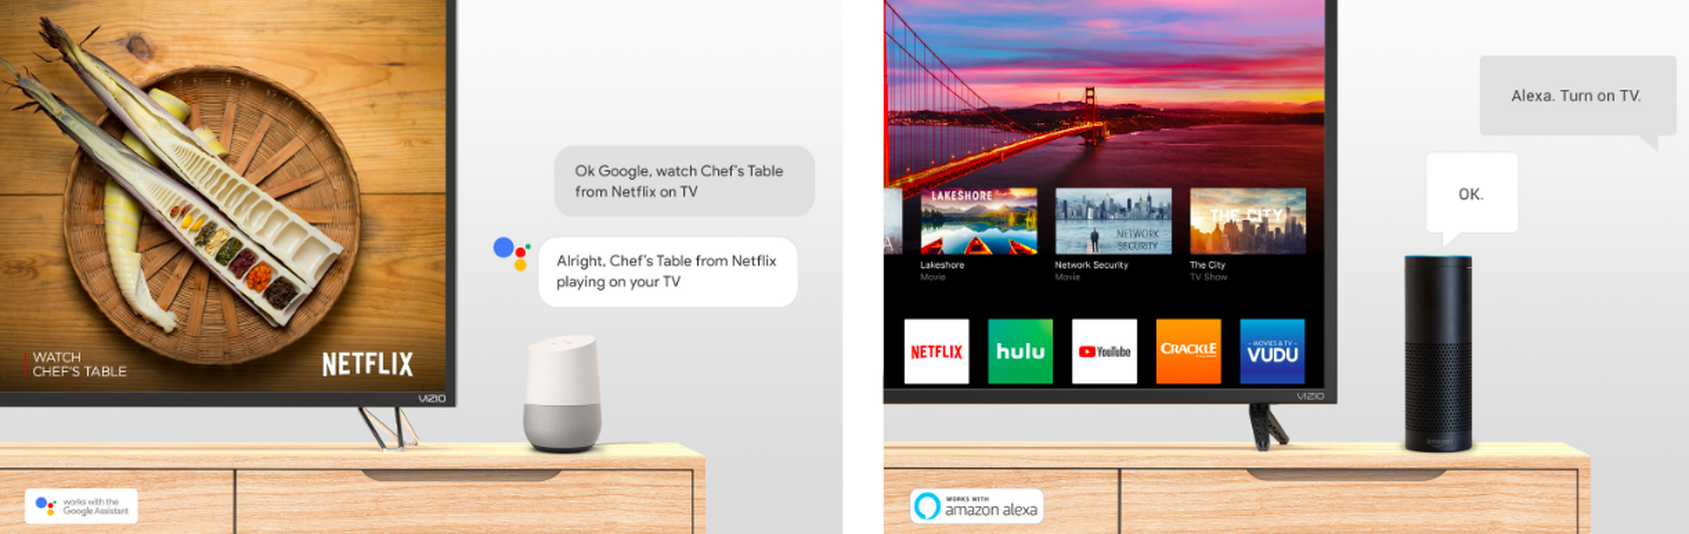 Spotify app for vizio smart tv remotes